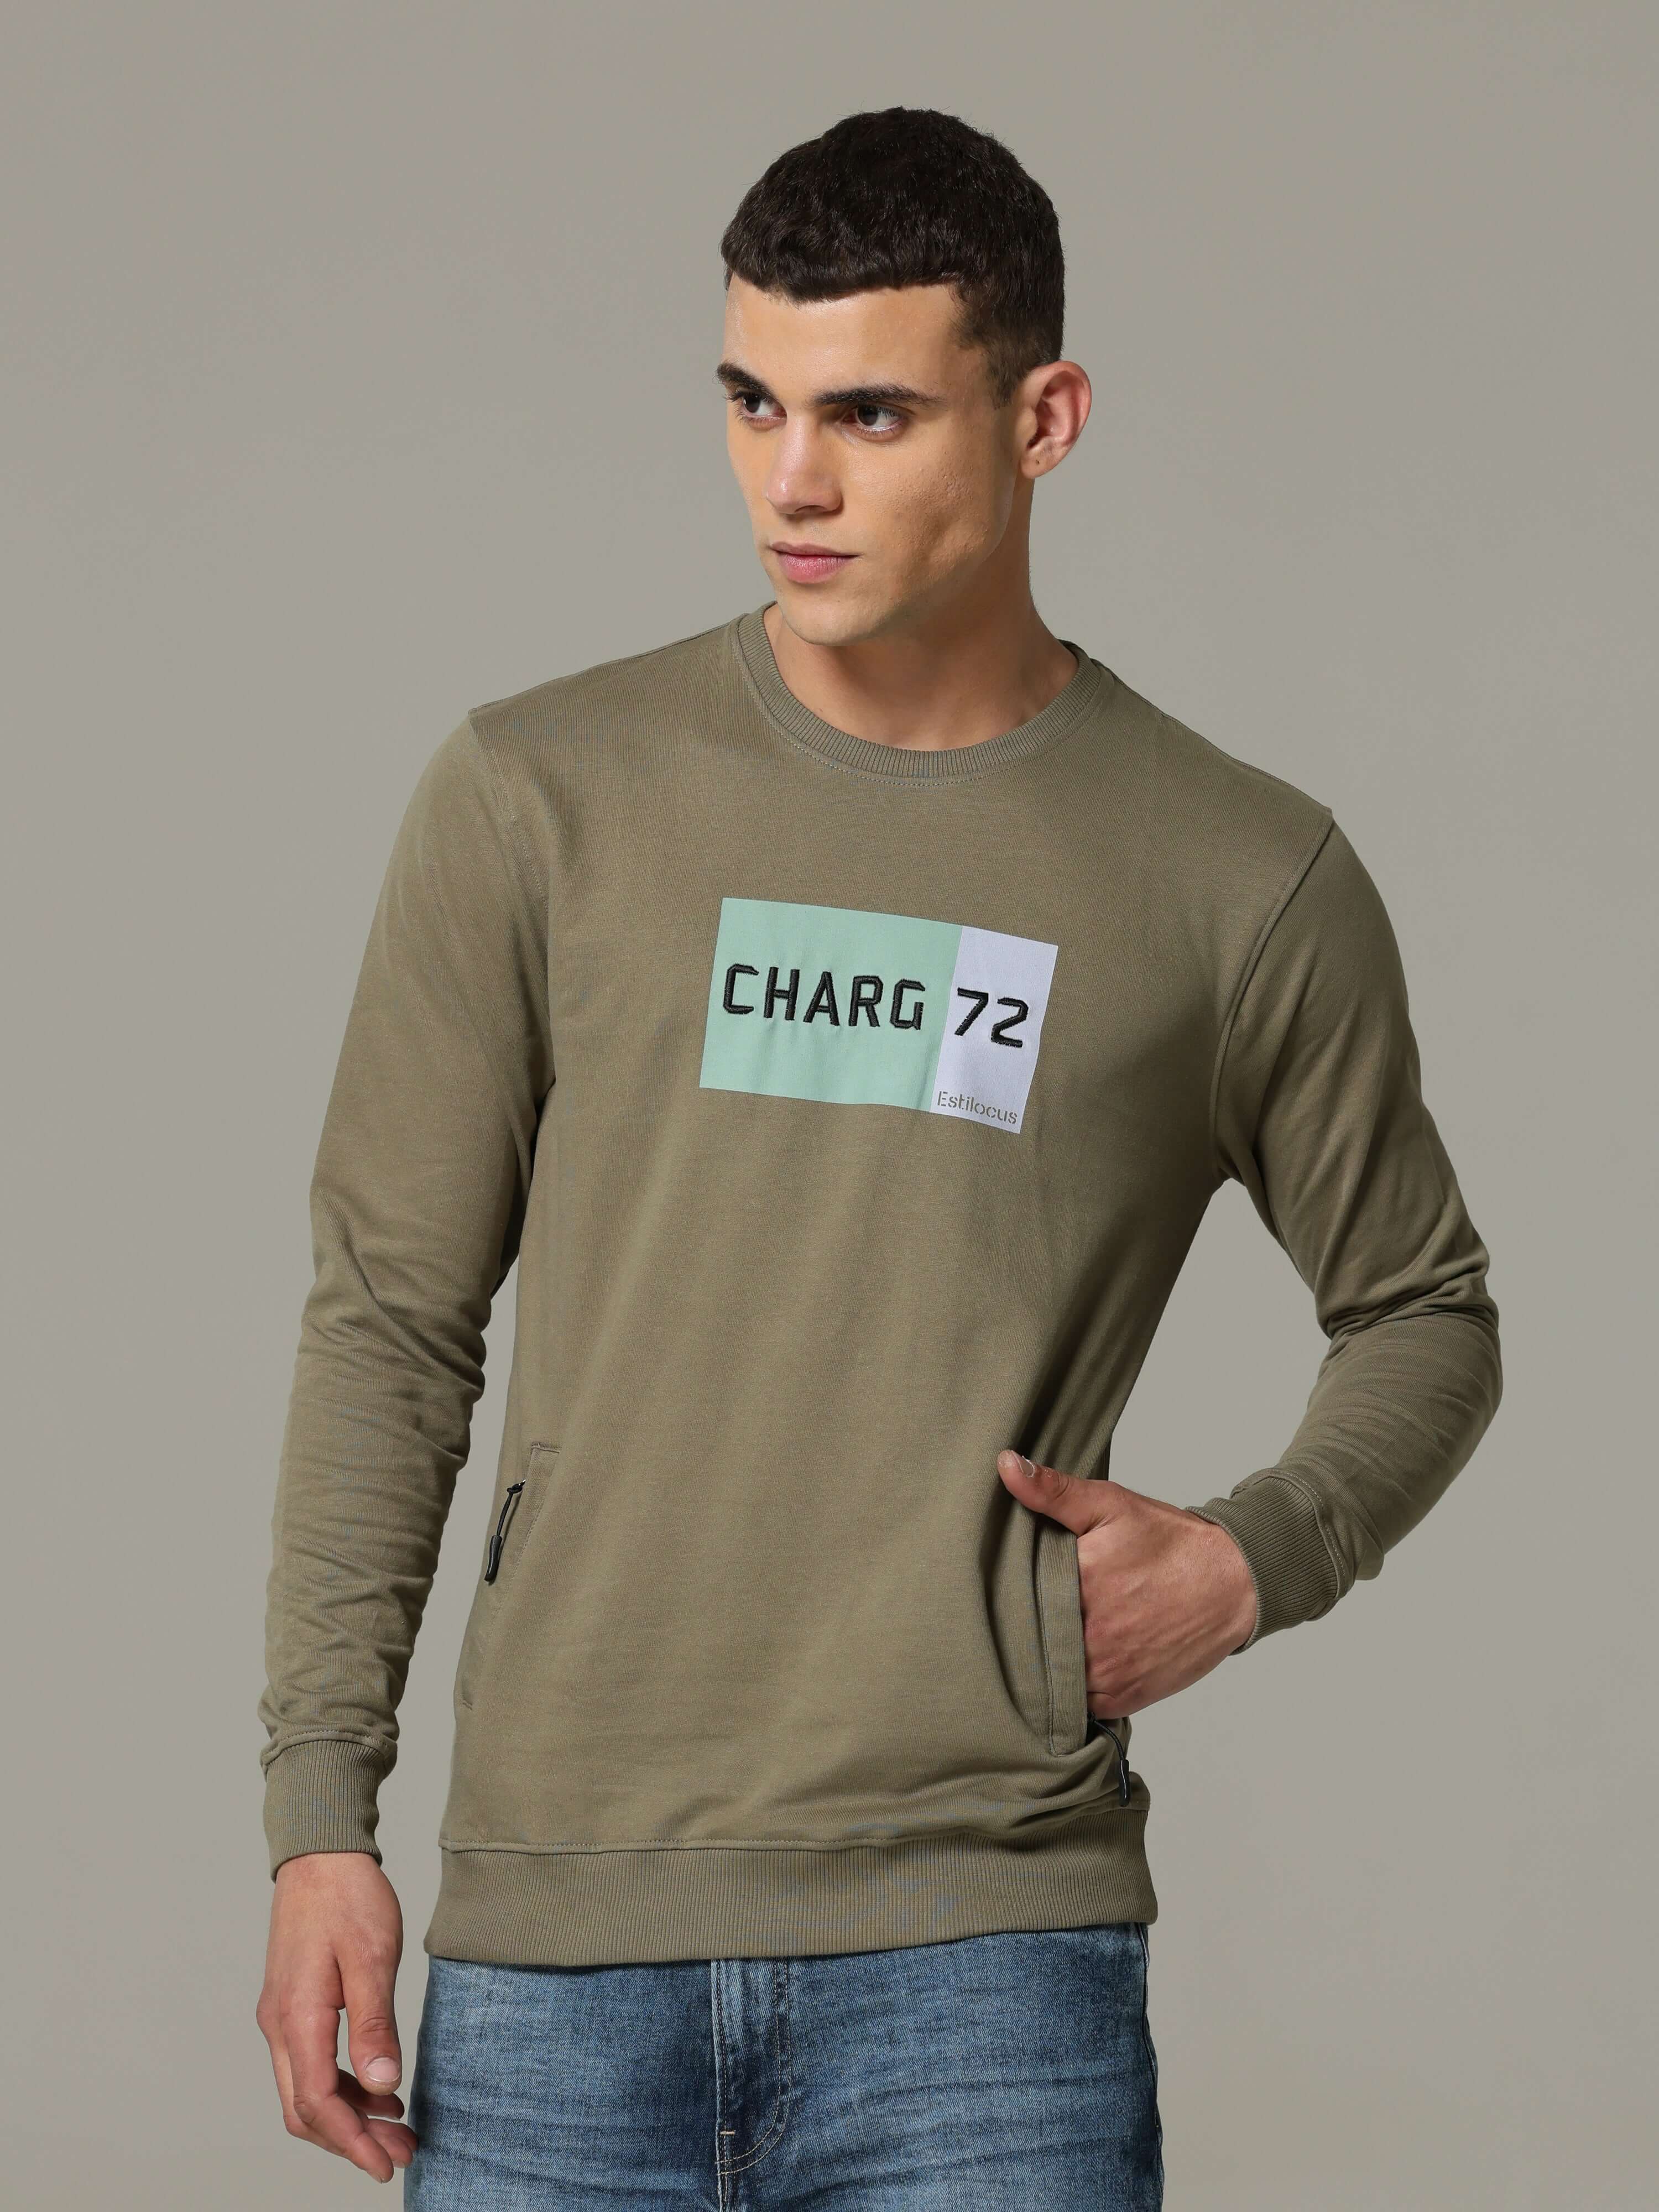 Charg 72 Green Sweat Shirt